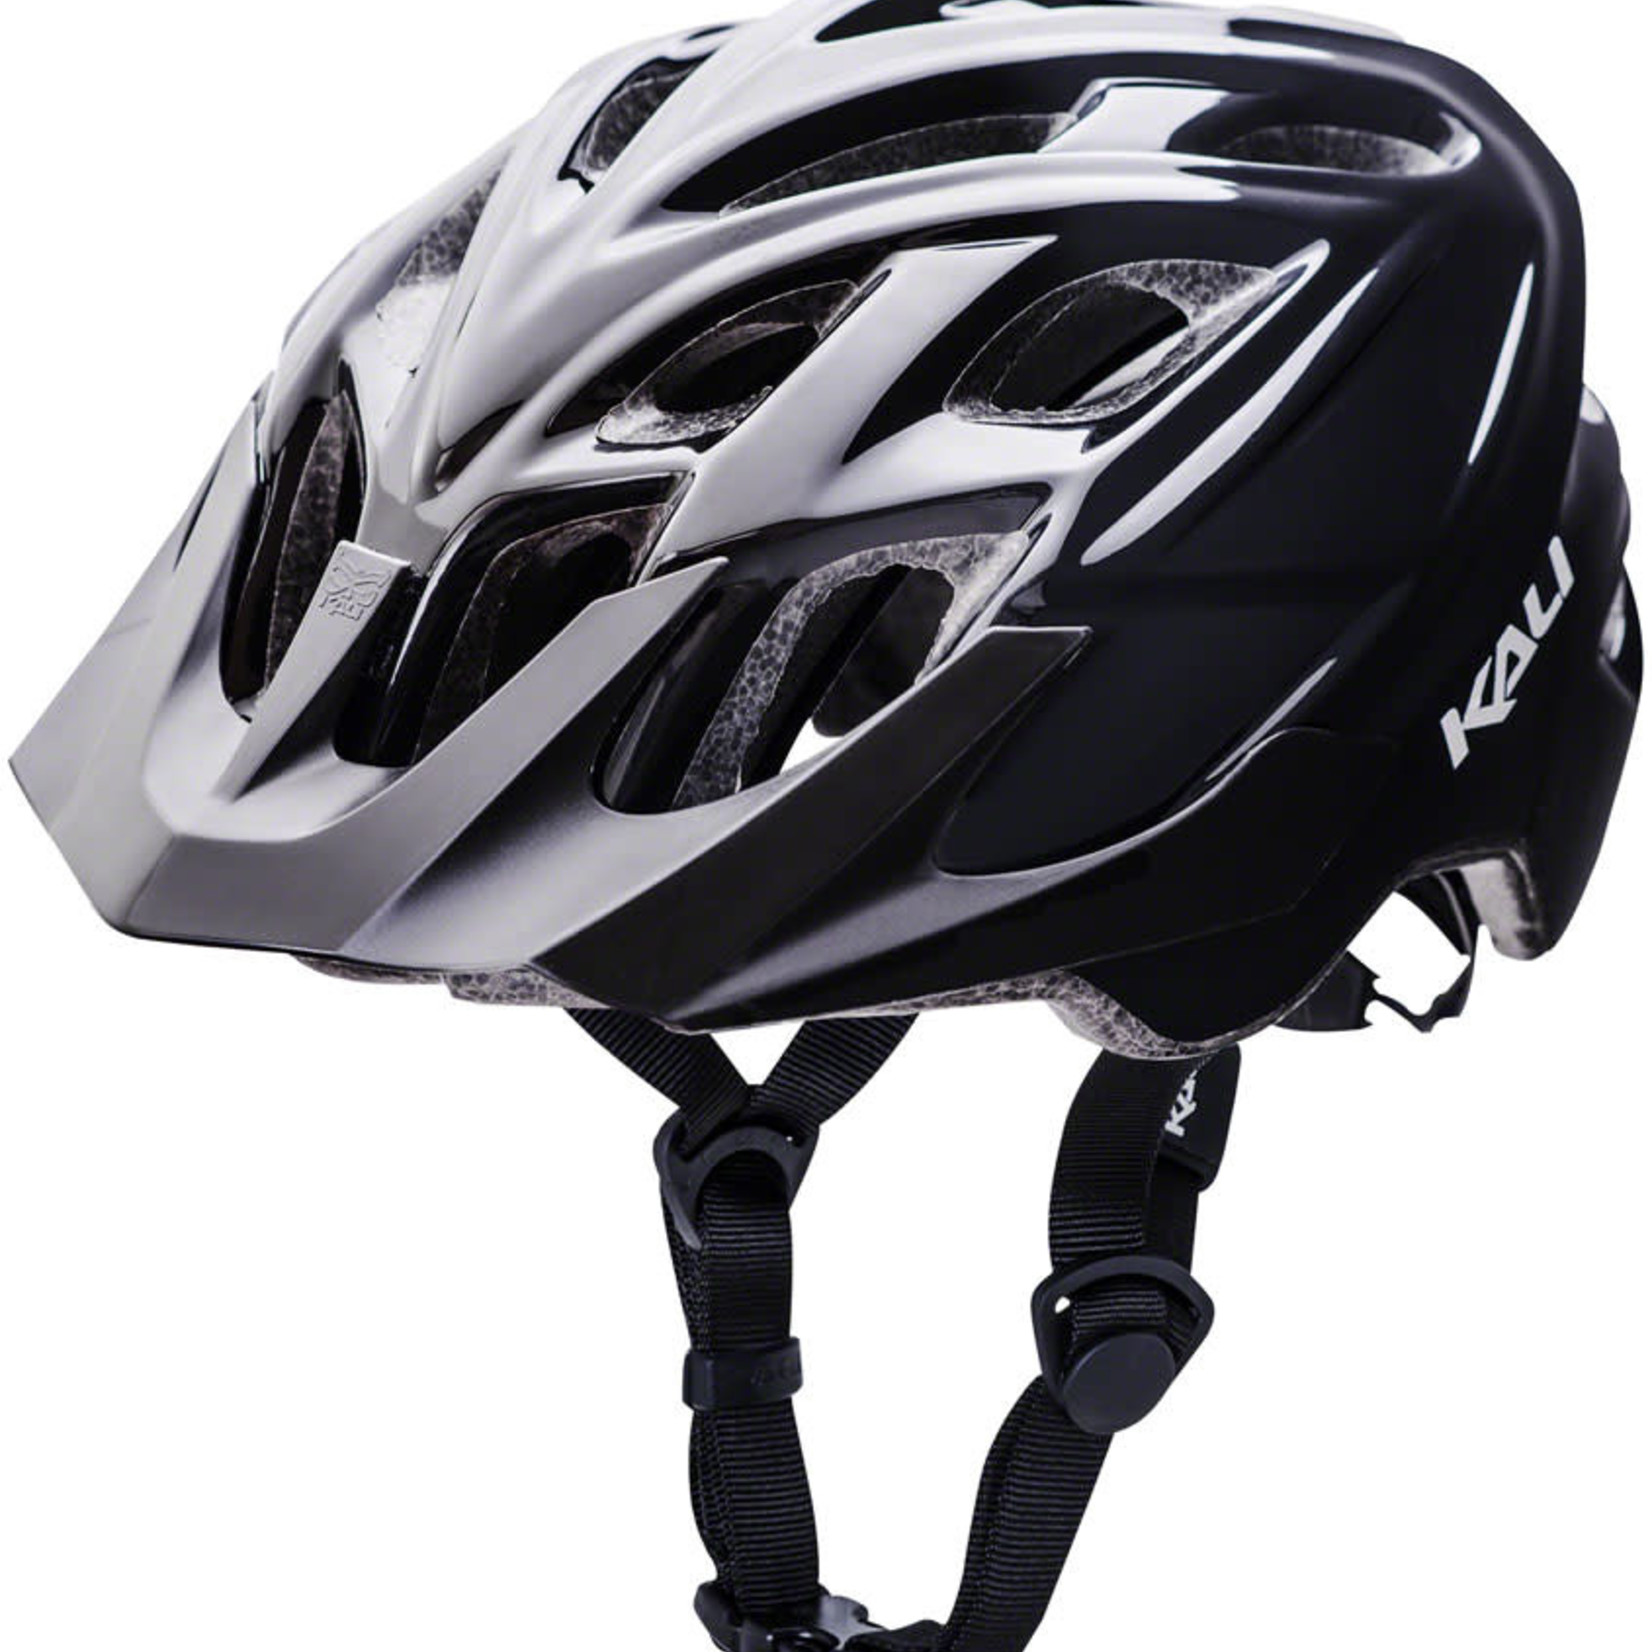 KALI Kali Protectives Chakra Solo Helmet - Solid Black, Small/Medium